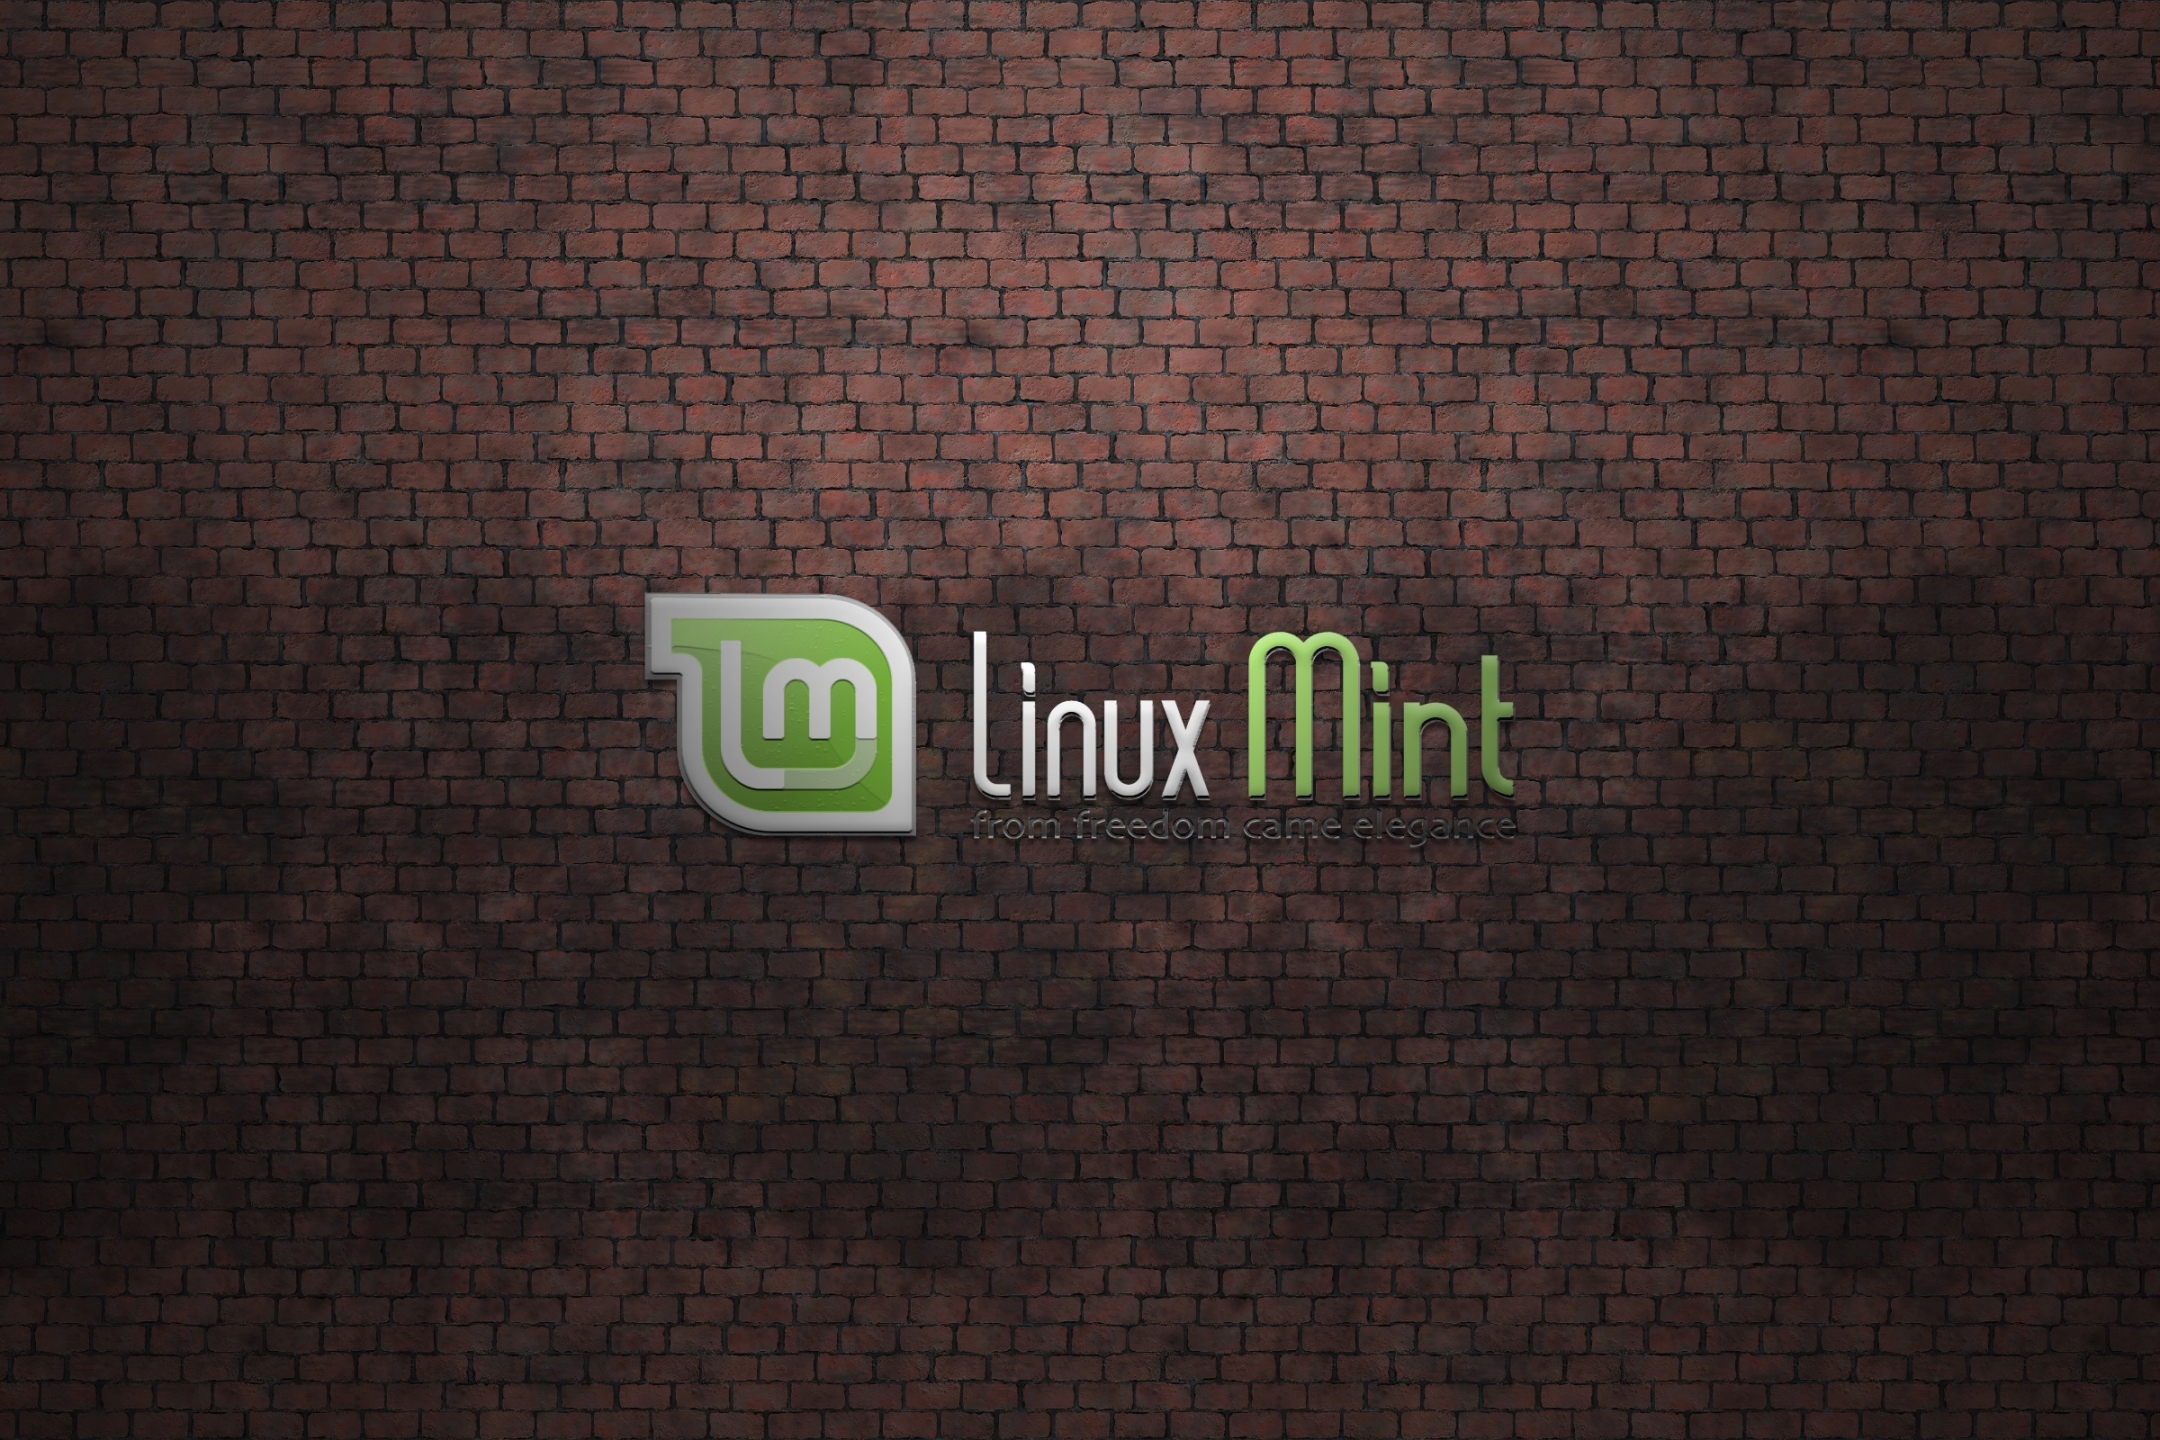 technology, linux mint, linux, logo, operating system